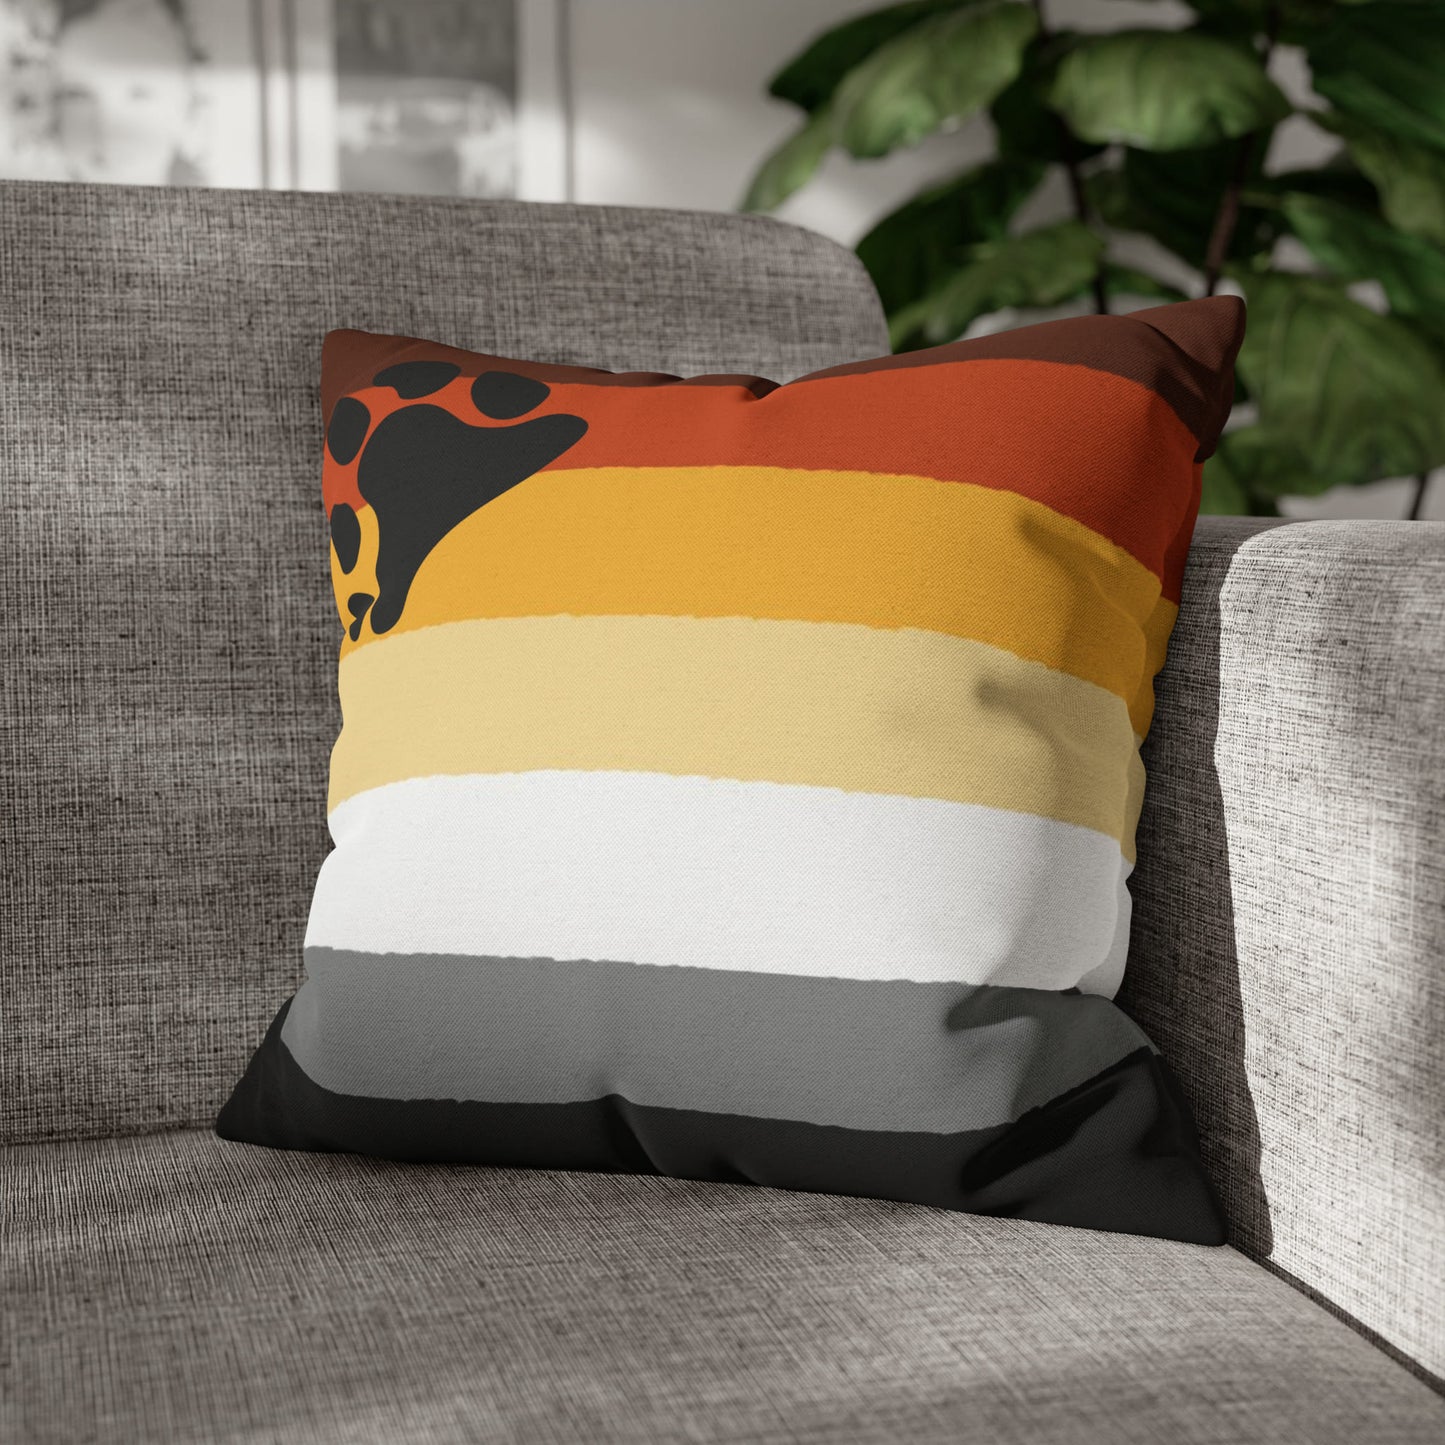 bear pride pillow on sofa